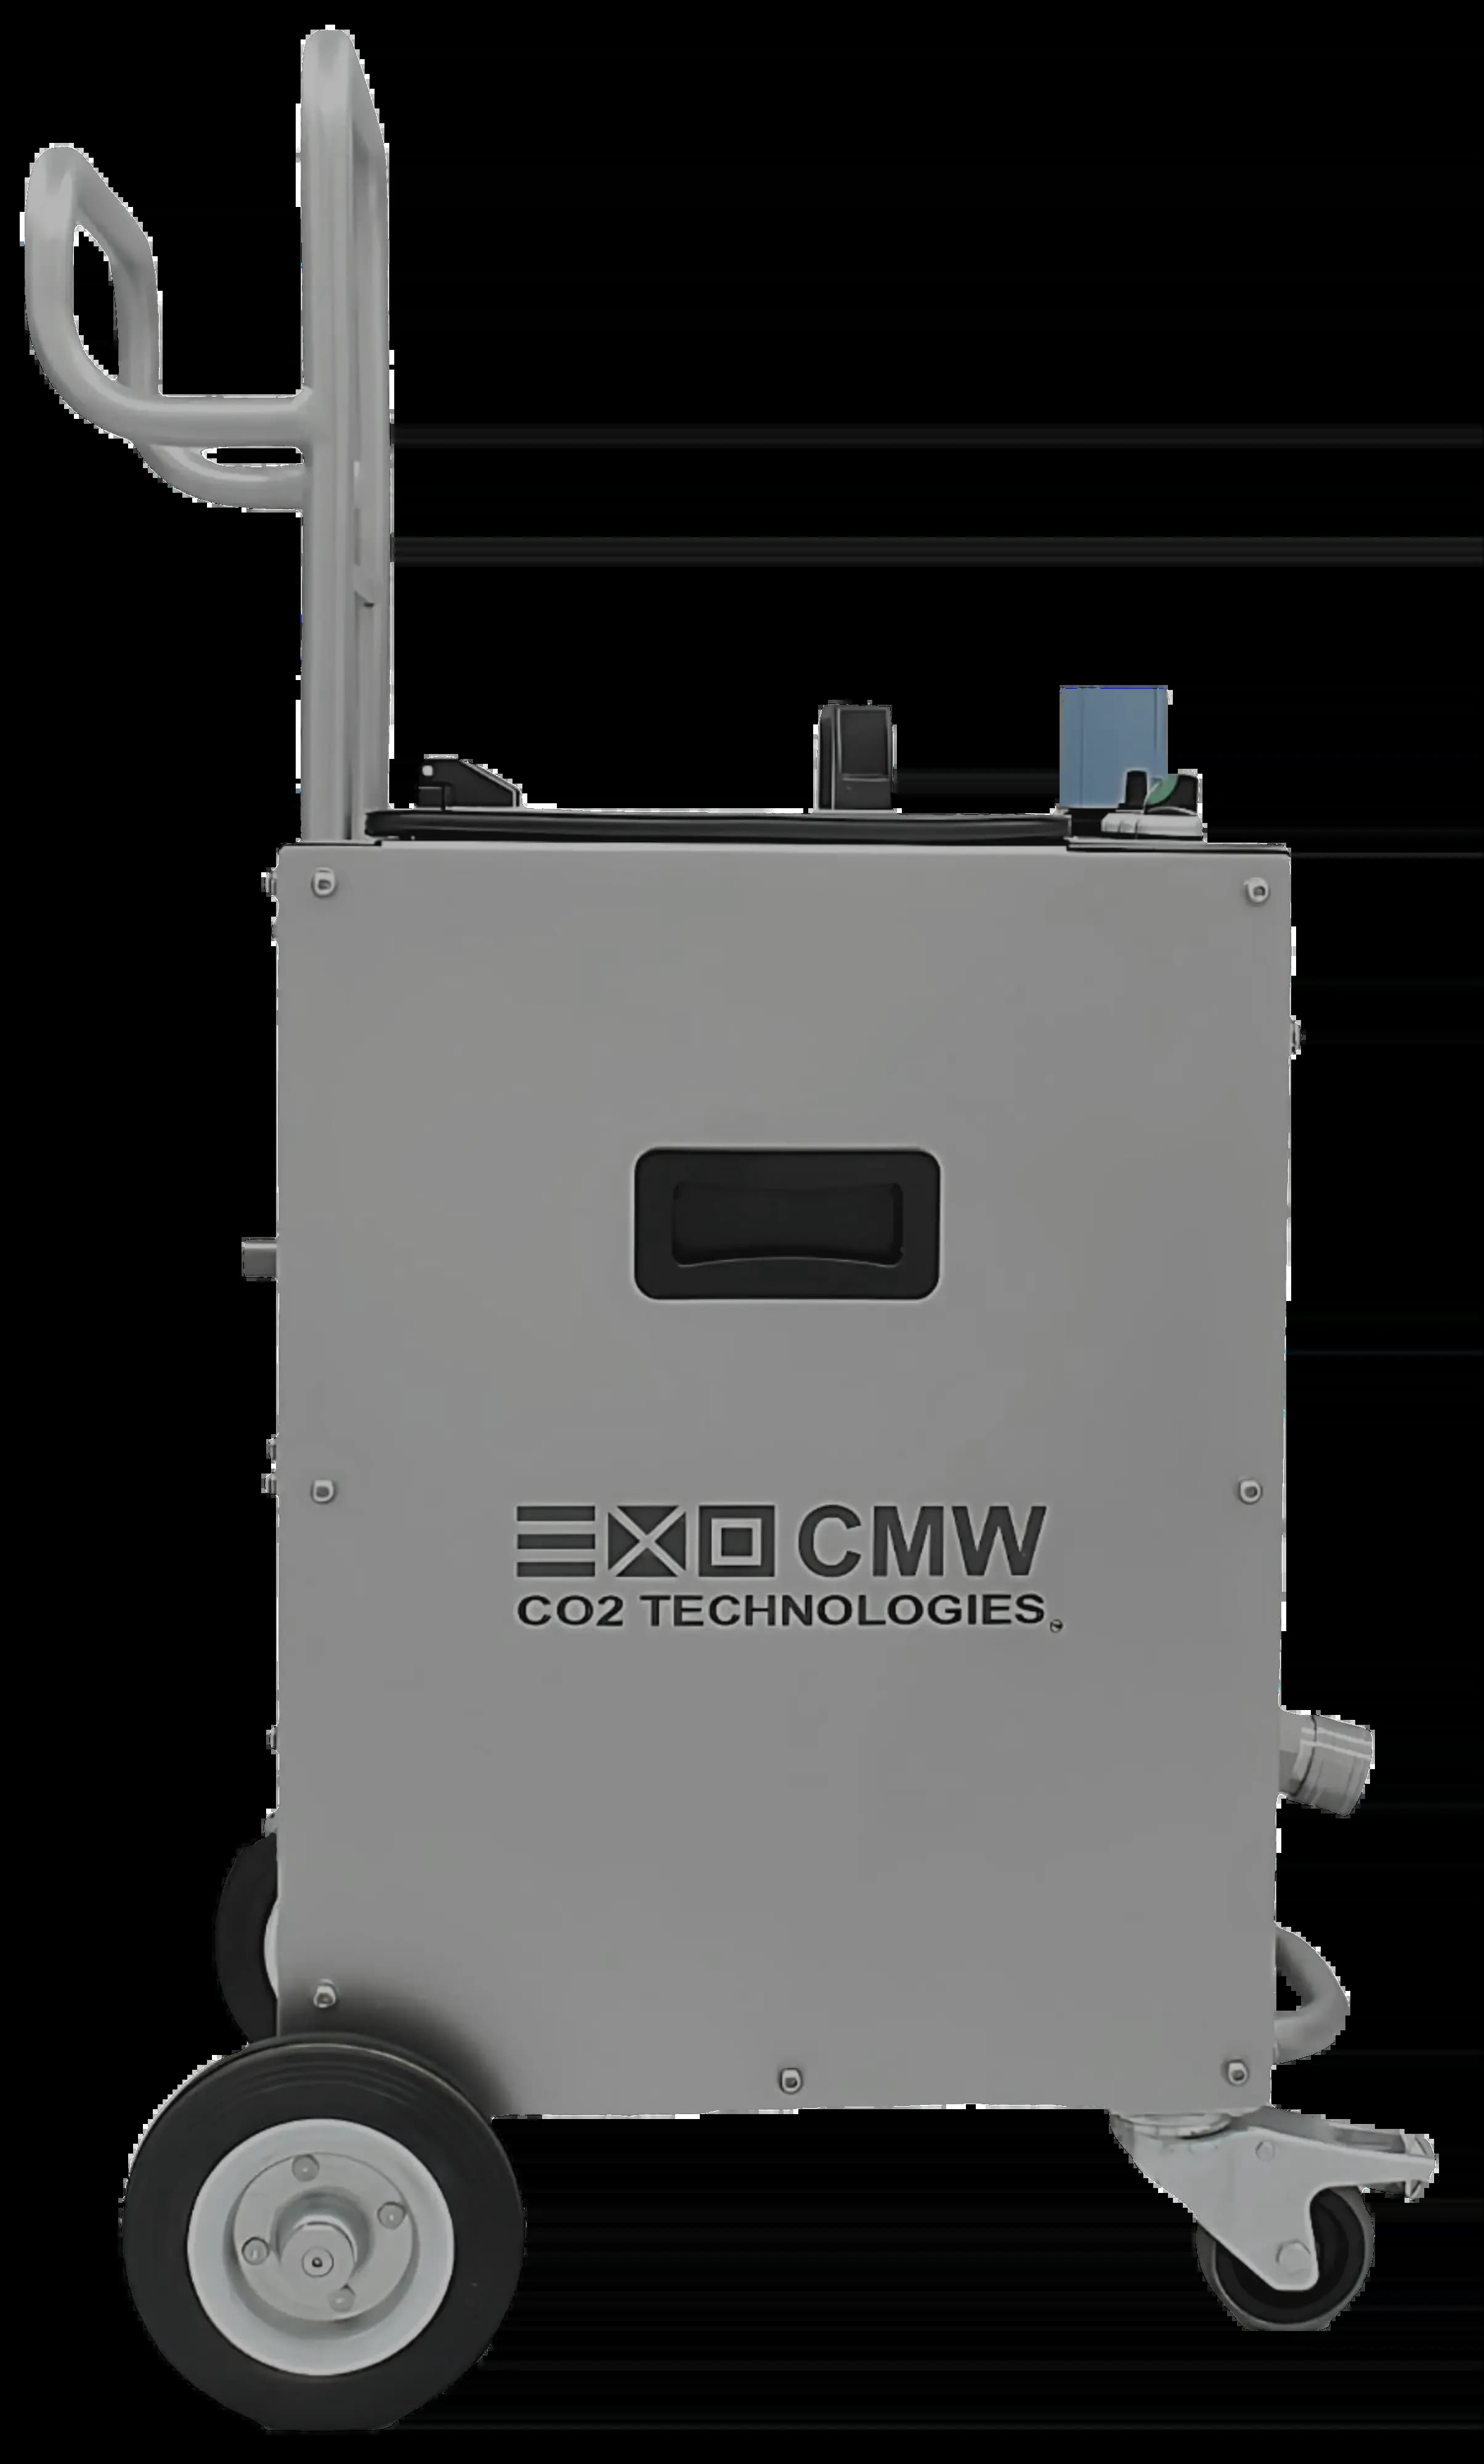 ATX Nano CMW Dry Ice Blaster